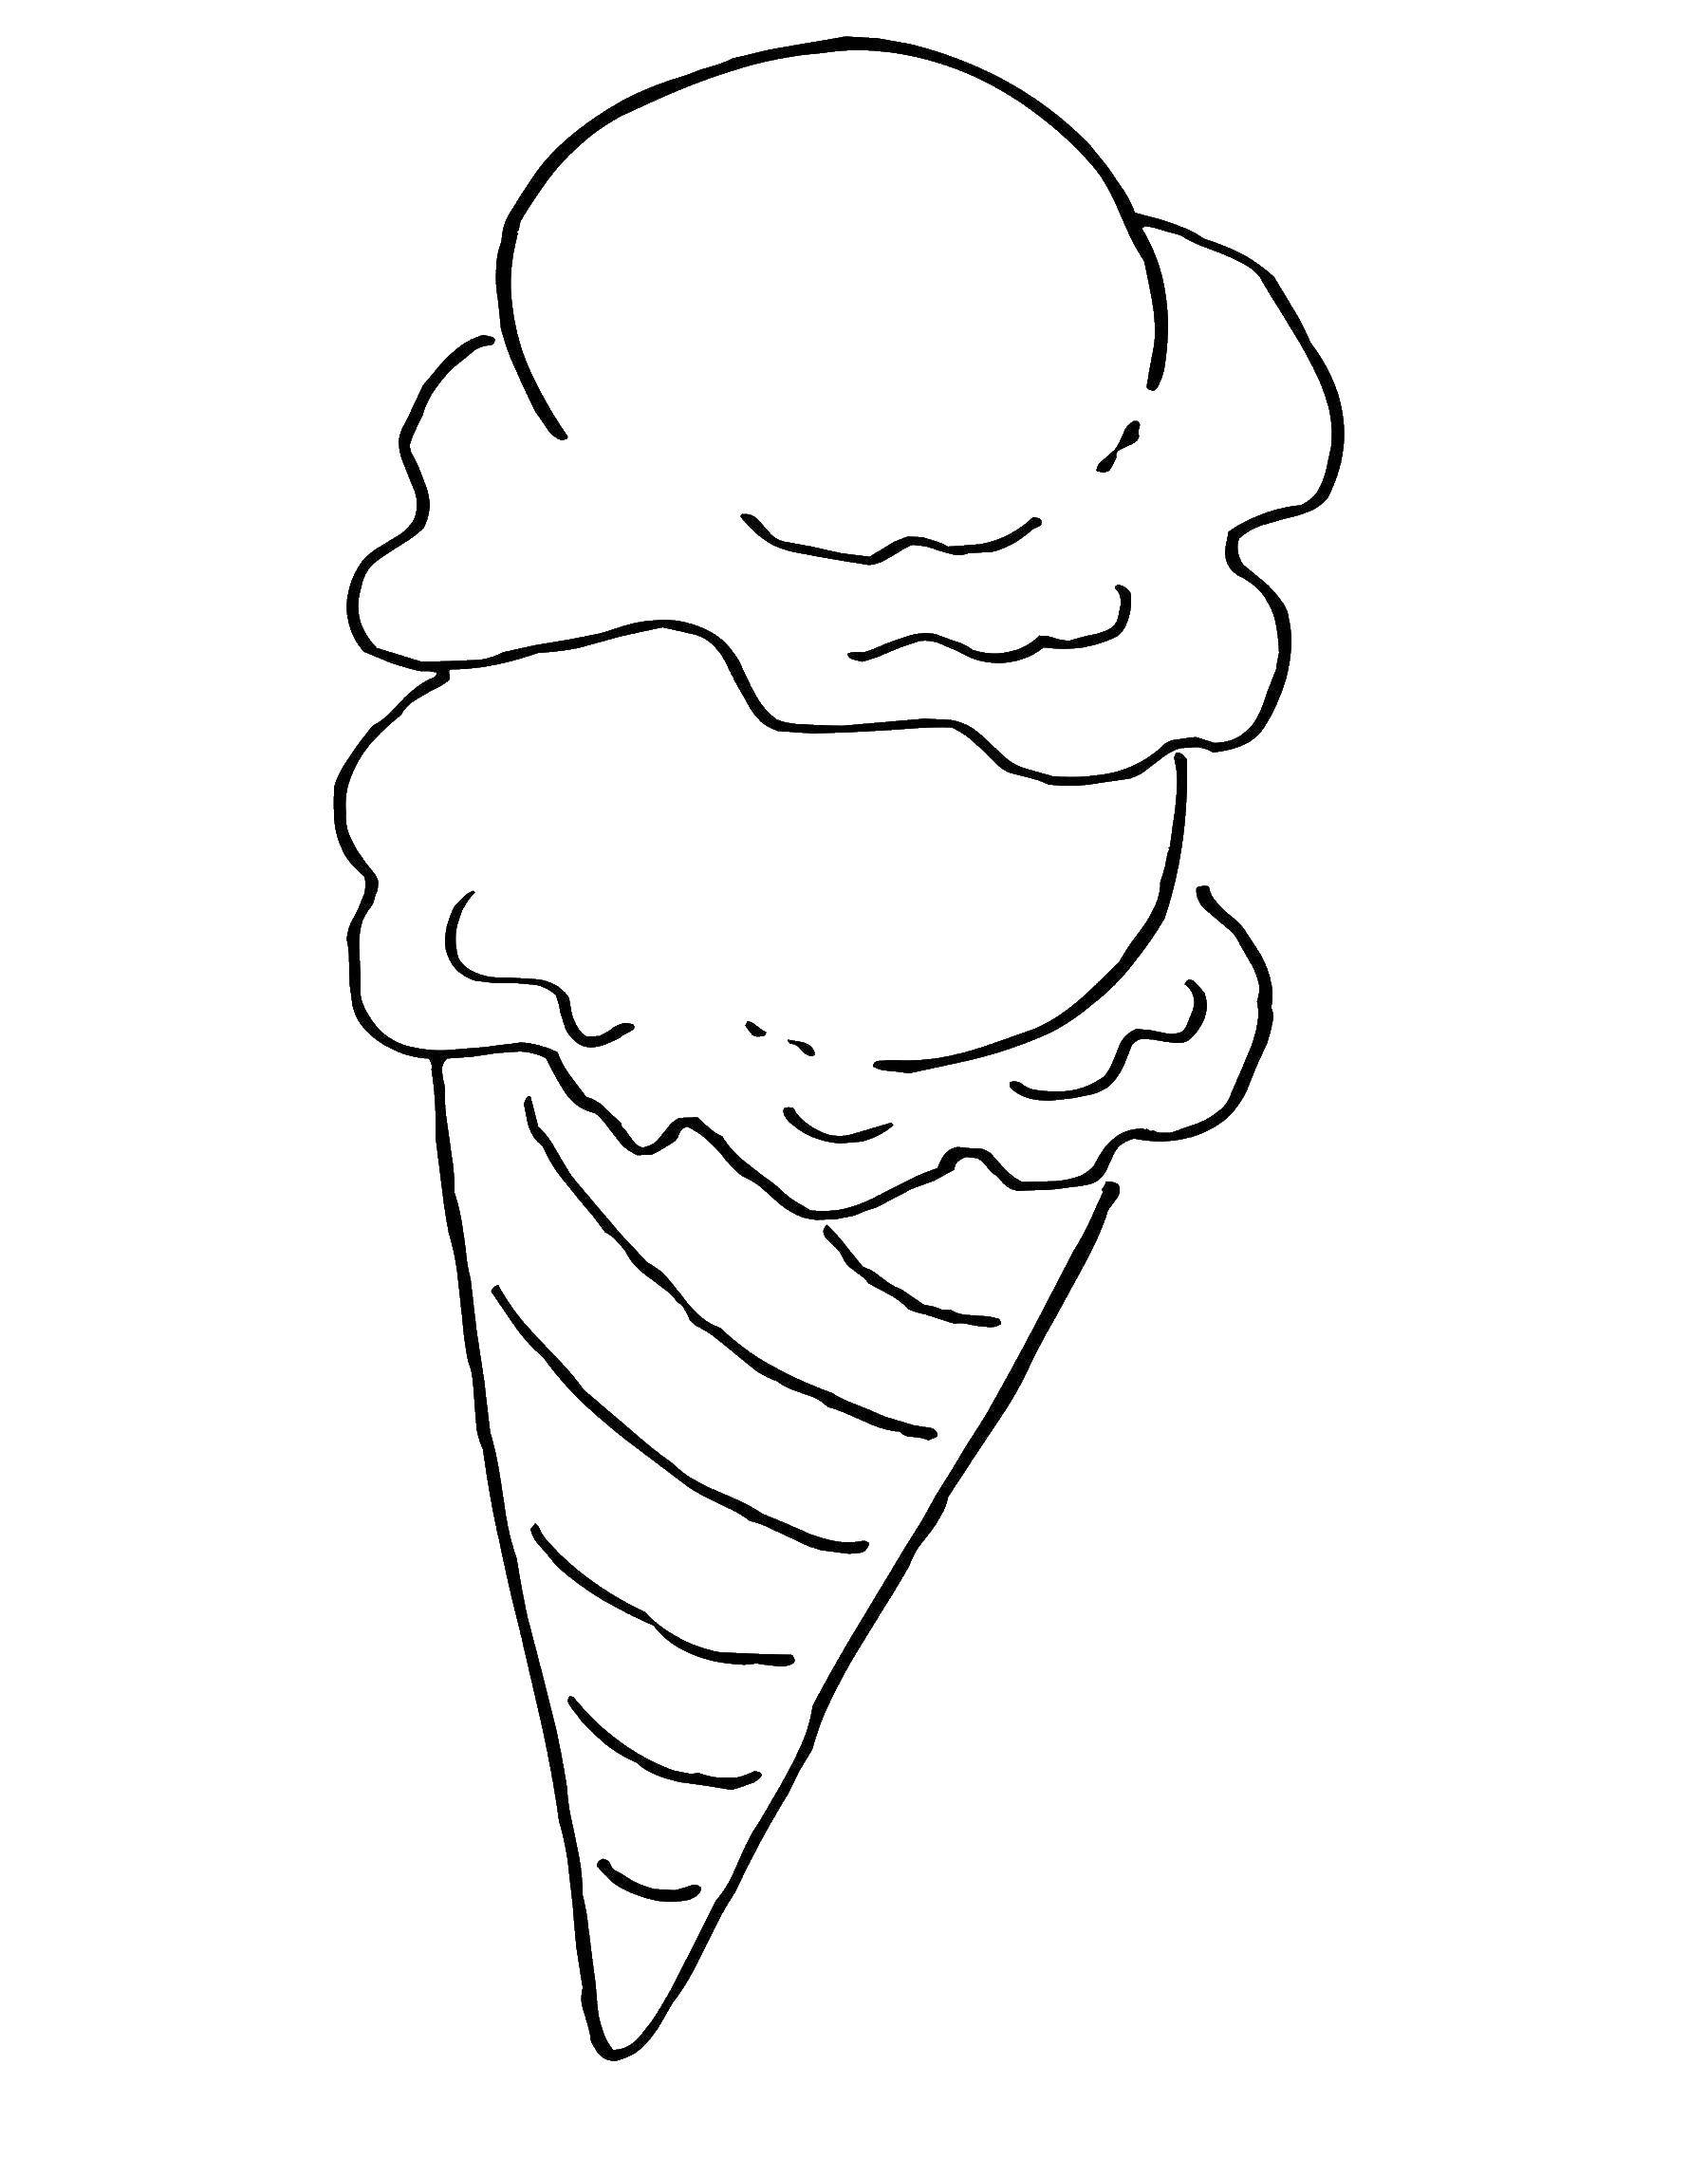 Coloring Ice cream. Category ice cream. Tags:  ice cream, ball ice cream.